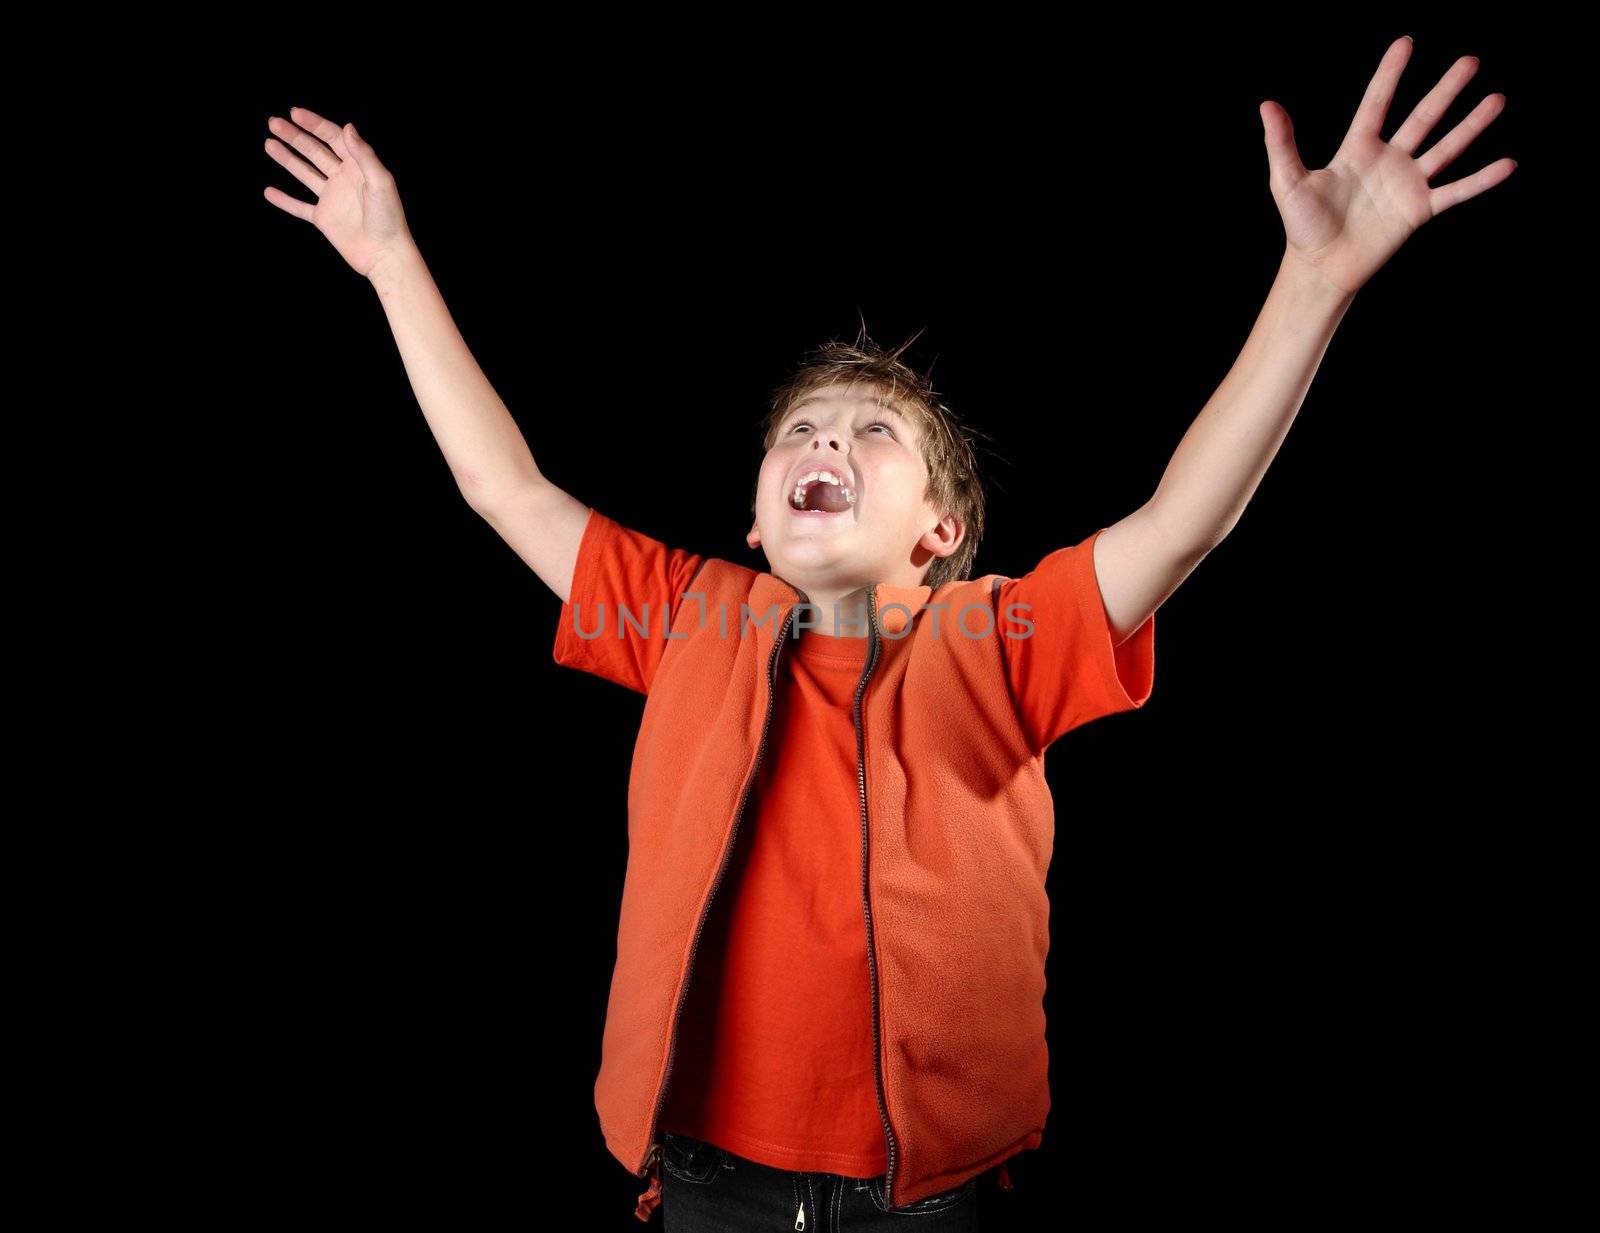 A child raises his hands in praise